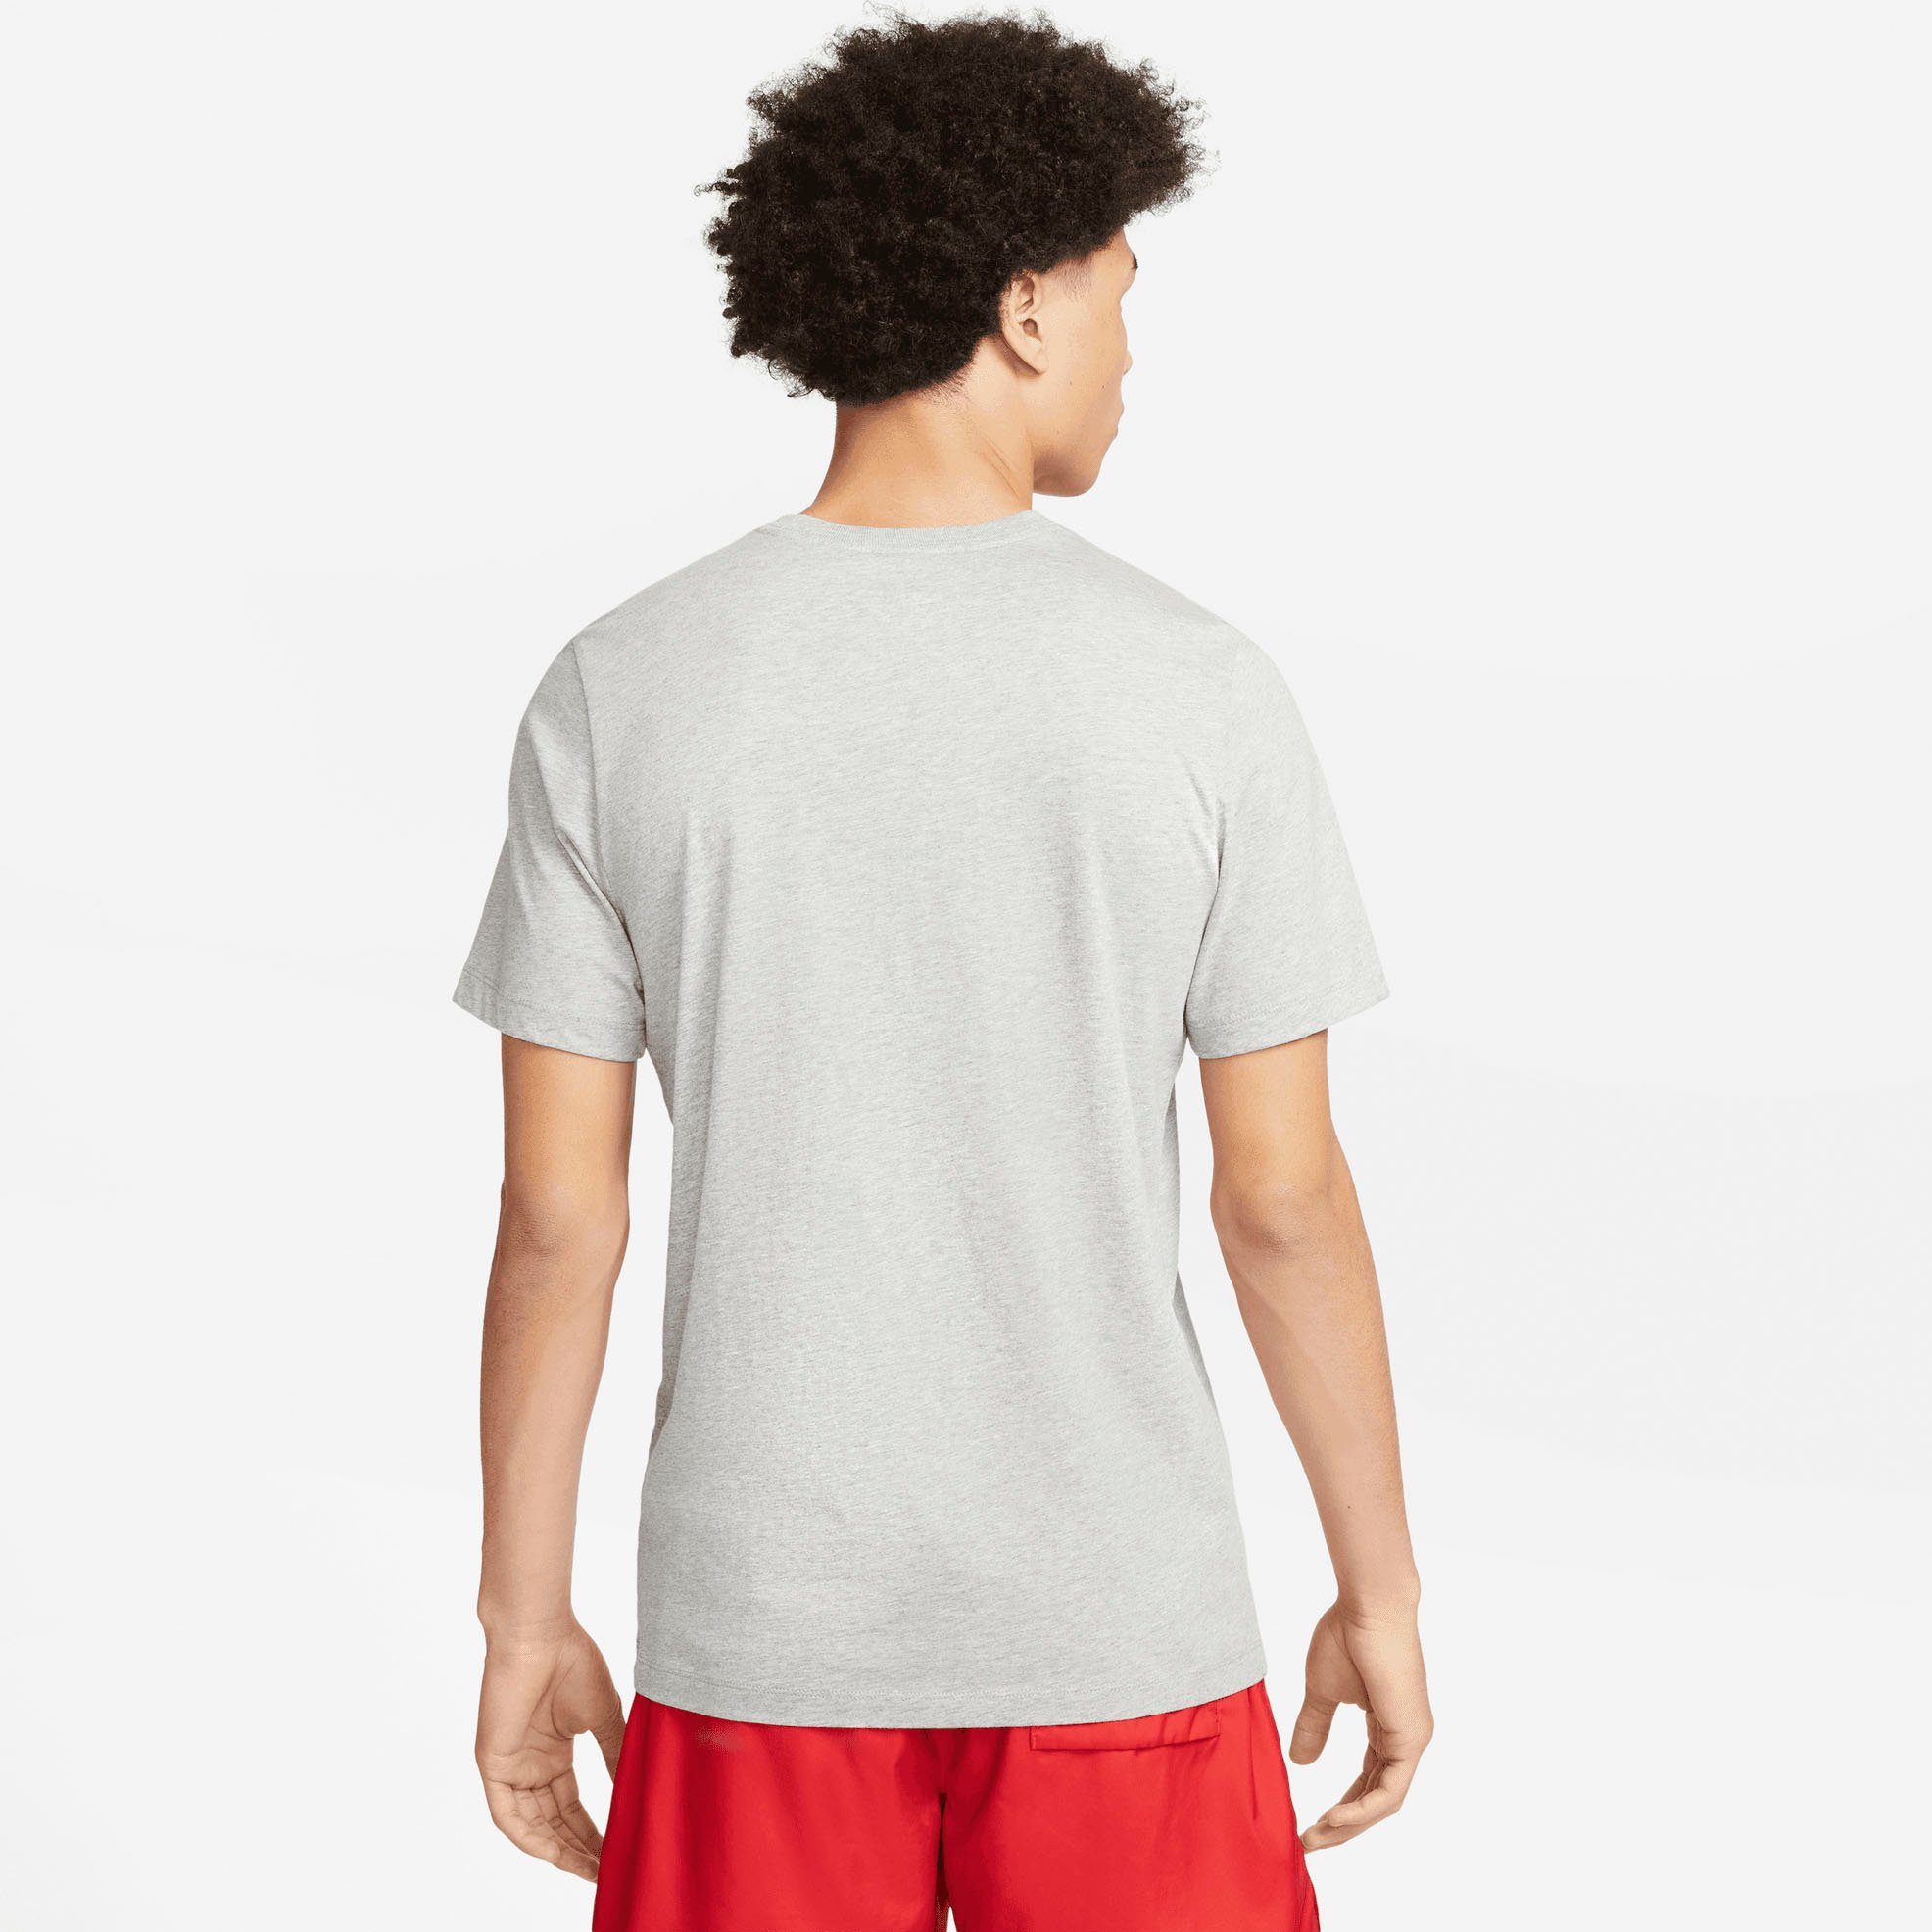 Nike Sportswear GREY HEATHER Men's T-Shirt T-Shirt DK